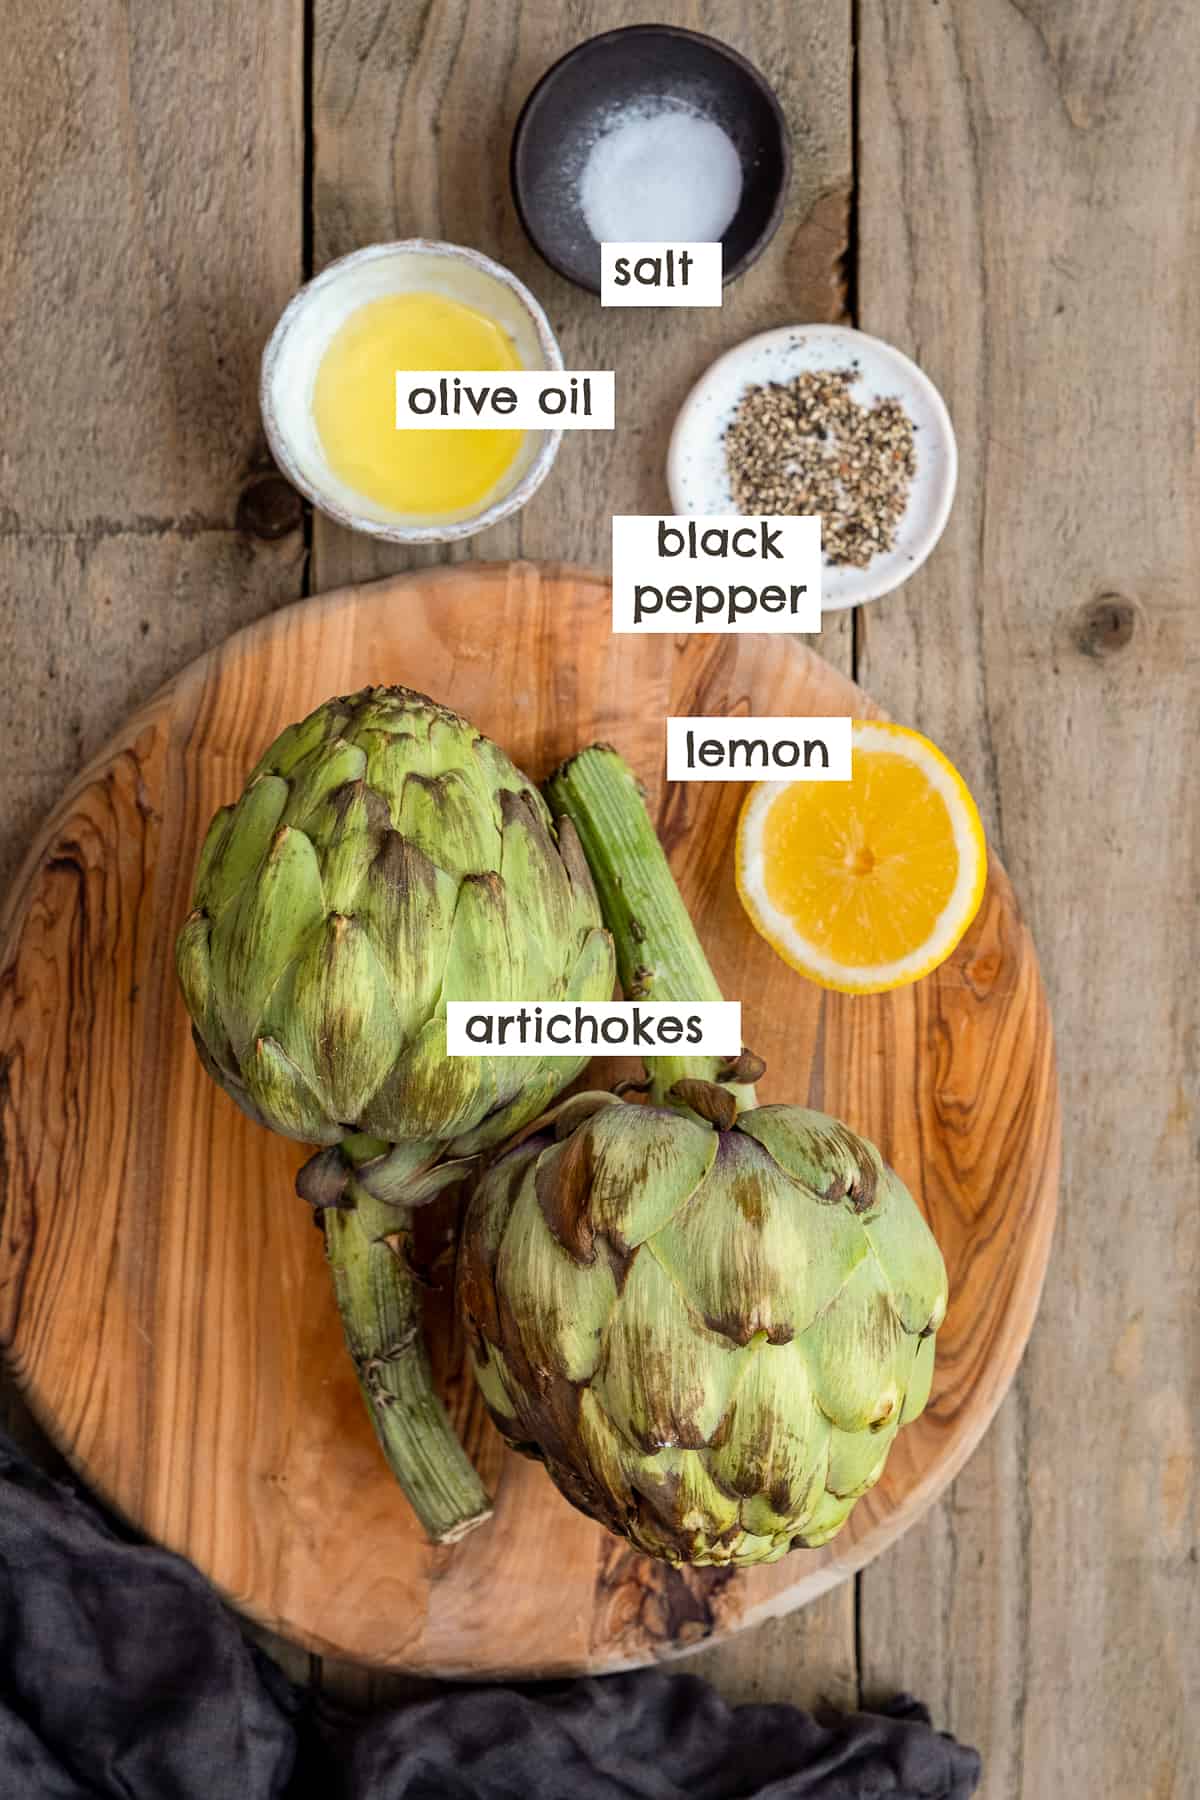 Artichokes, half lemon, black pepper, salt and olive oil on a wooden board.